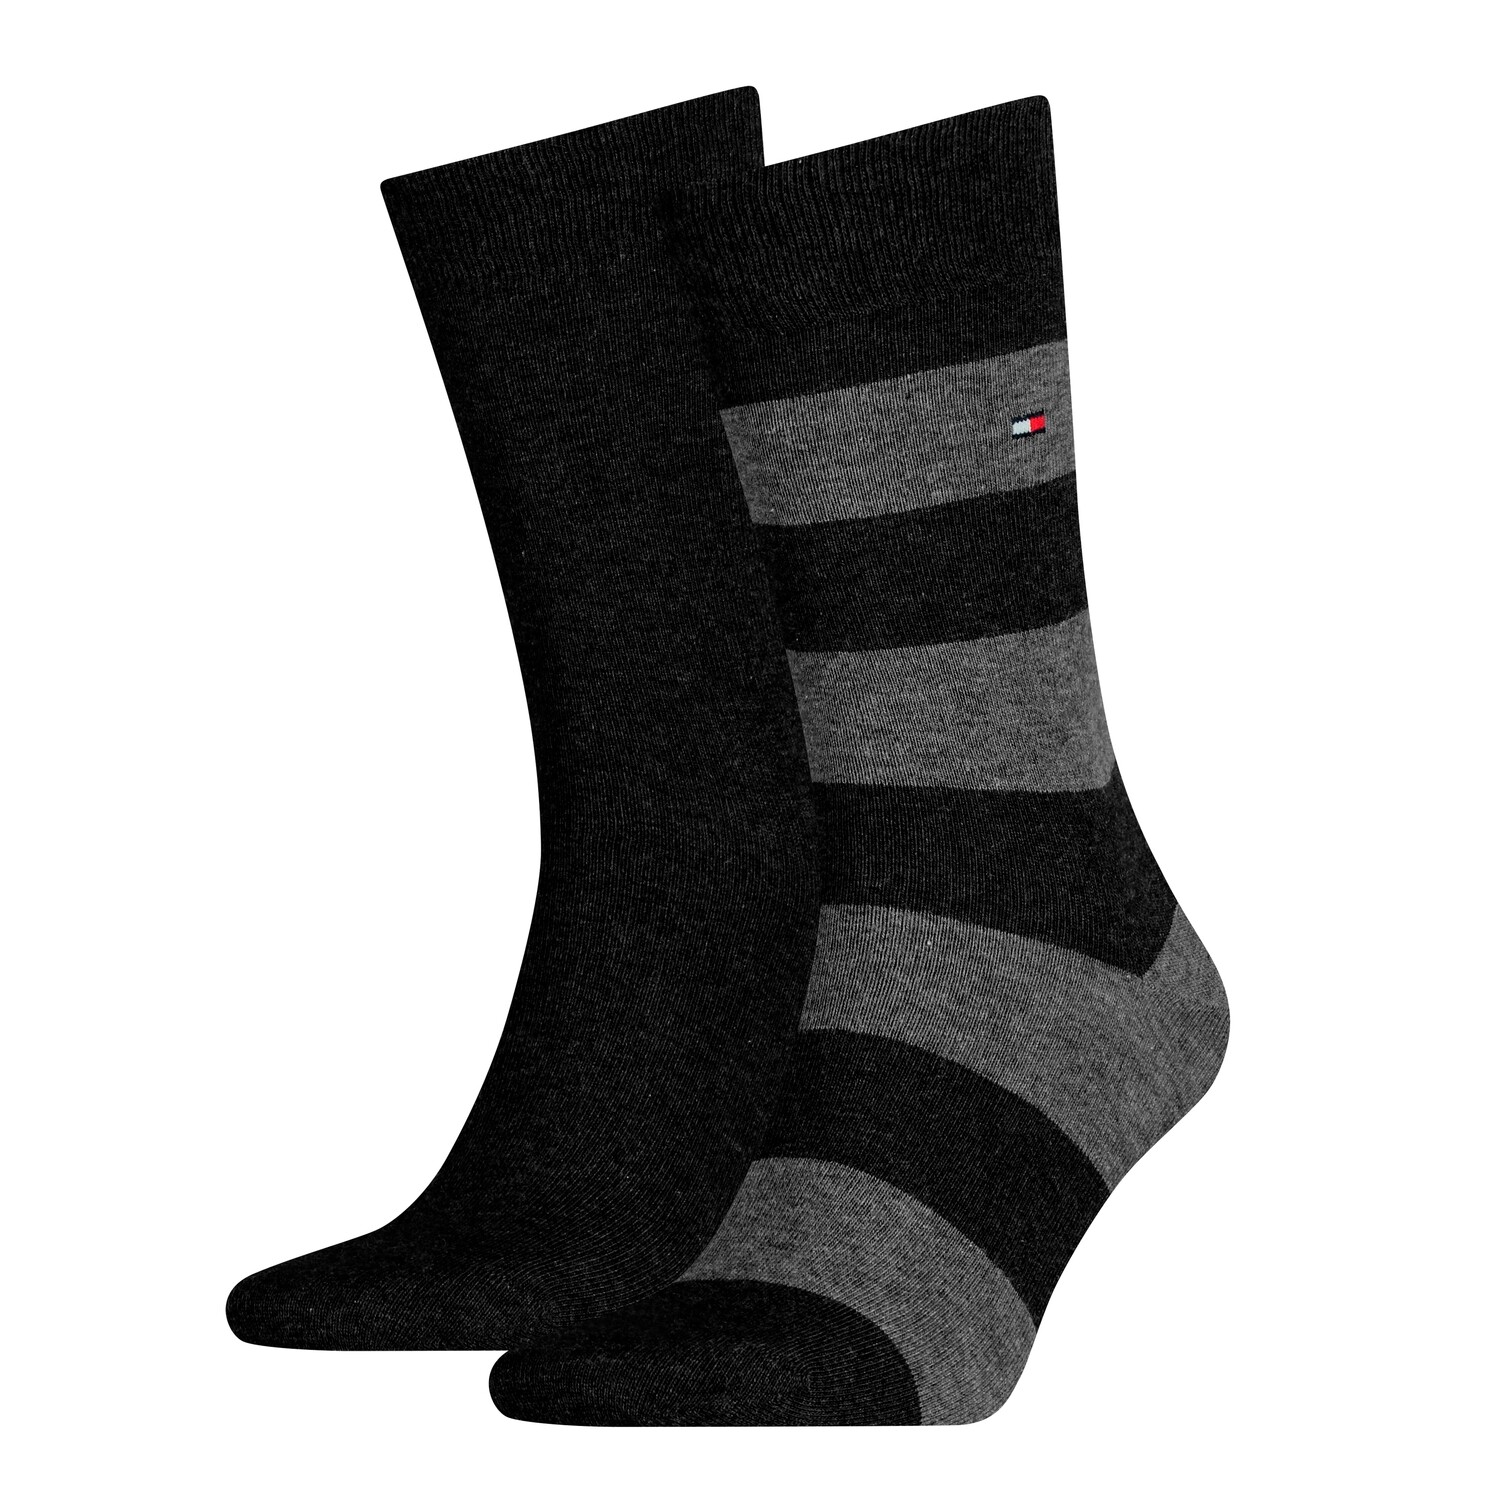 Hilfiger sokken sok 2-pair streep/uni